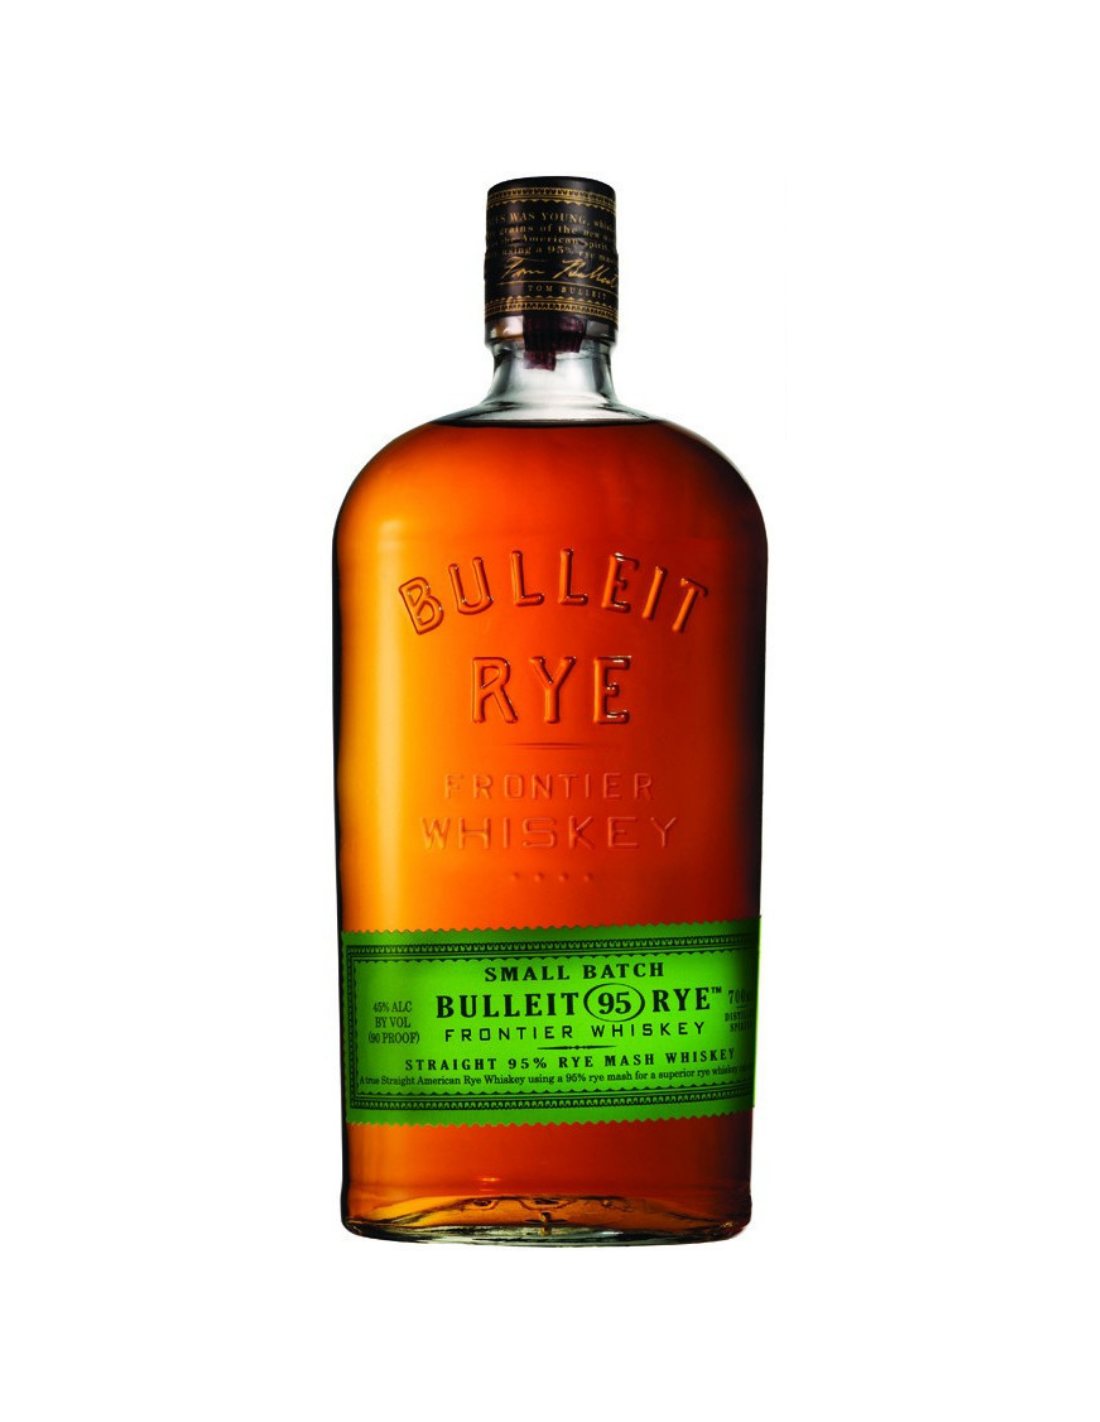 Whisky Bulleit 95 Rye, 0.7L, 45% alc., SUA alcooldiscount.ro